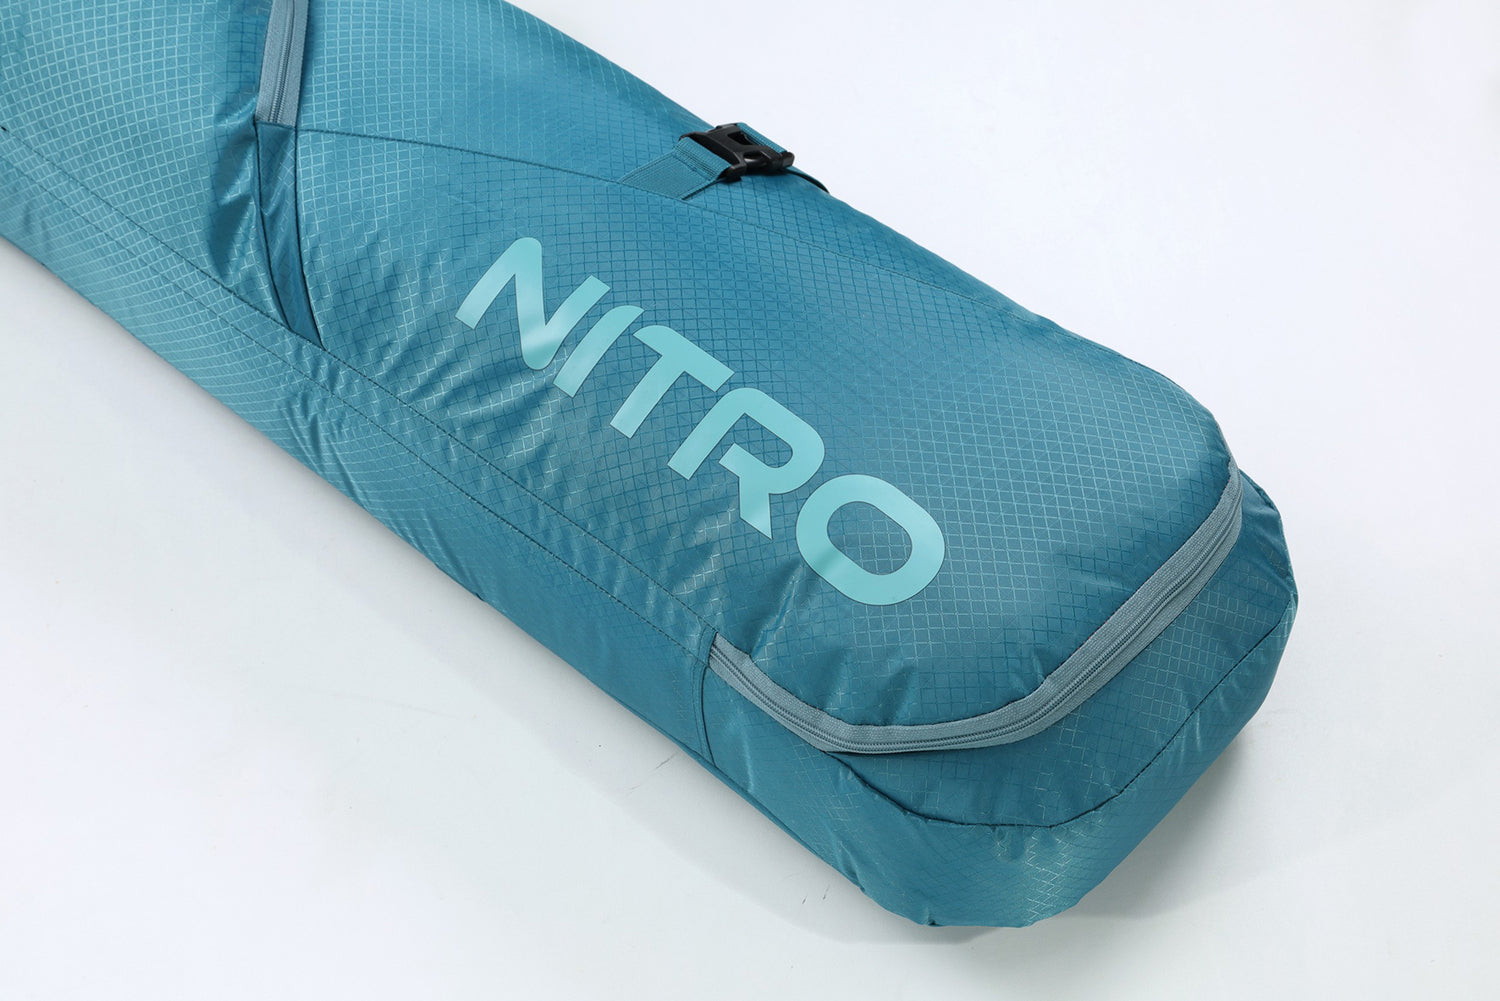 Nitro TRACKER WHEELIE BOARD BAG